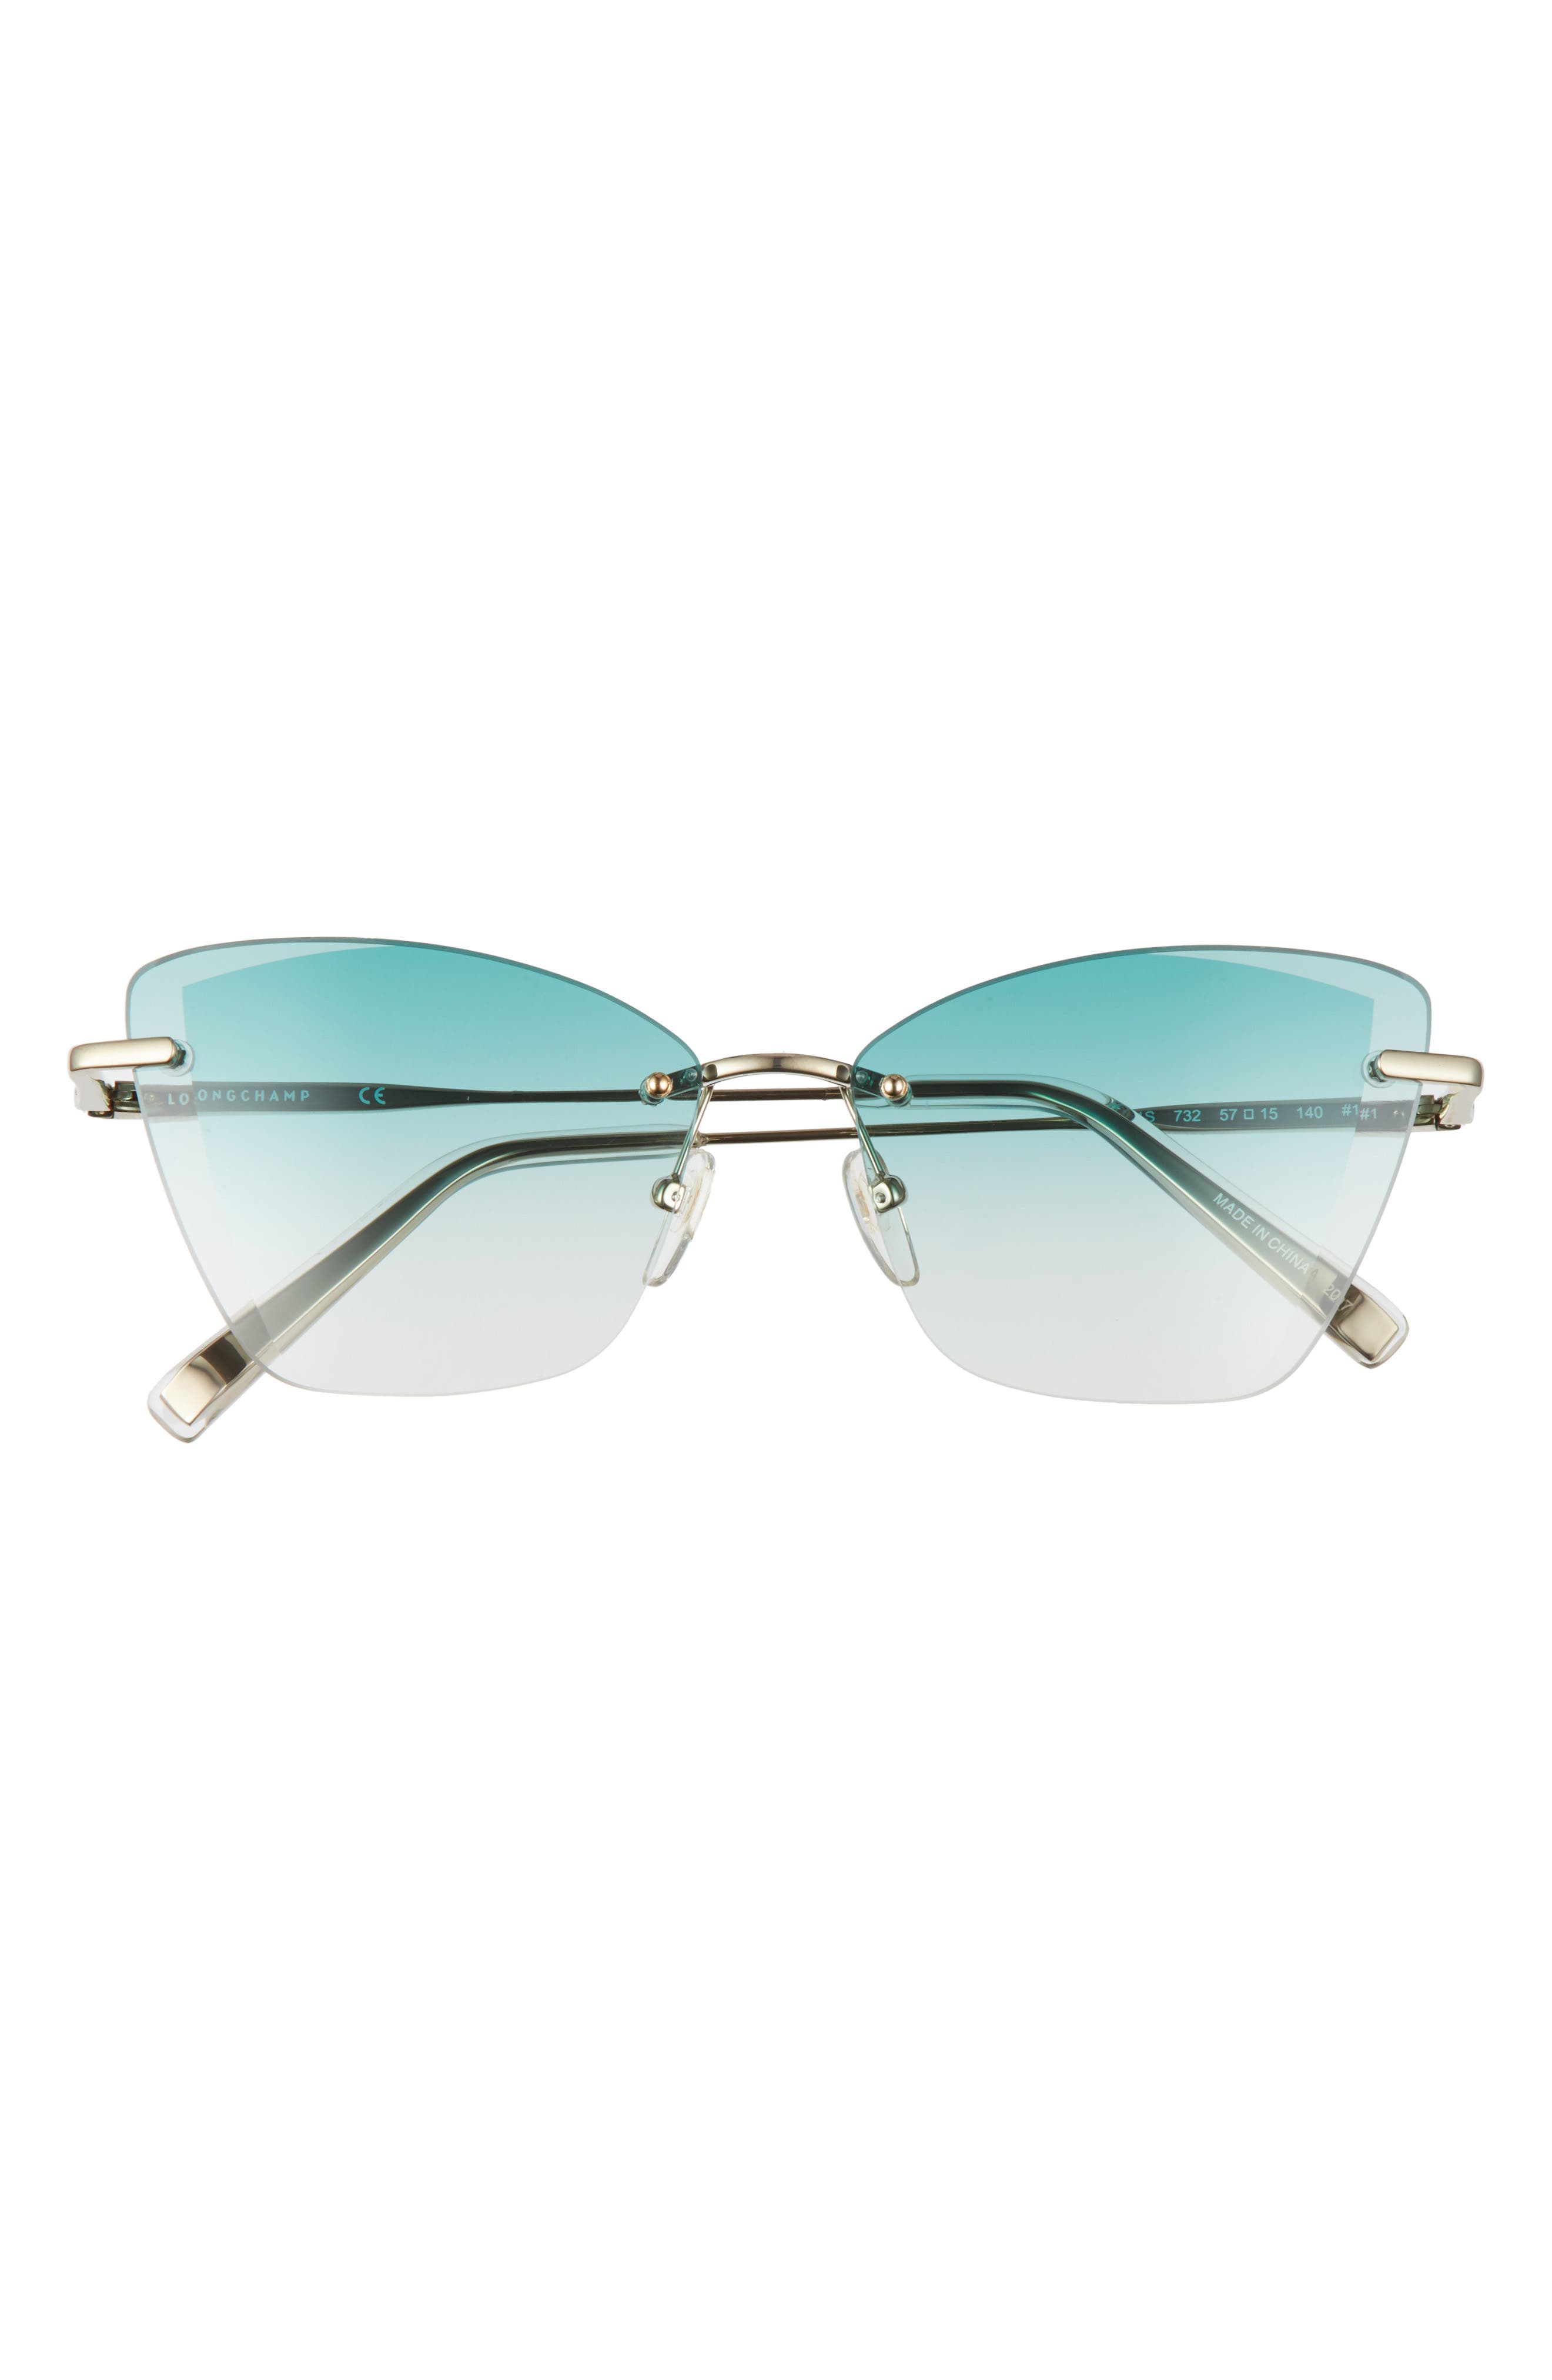 nordstrom longchamp sunglasses